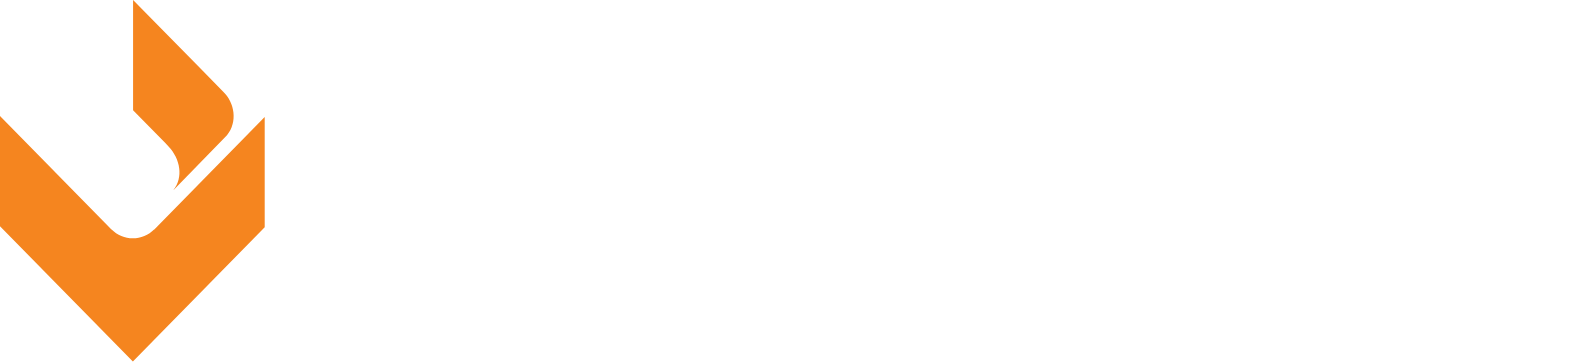 Urgent.ly Inc. logo large for dark backgrounds (transparent PNG)